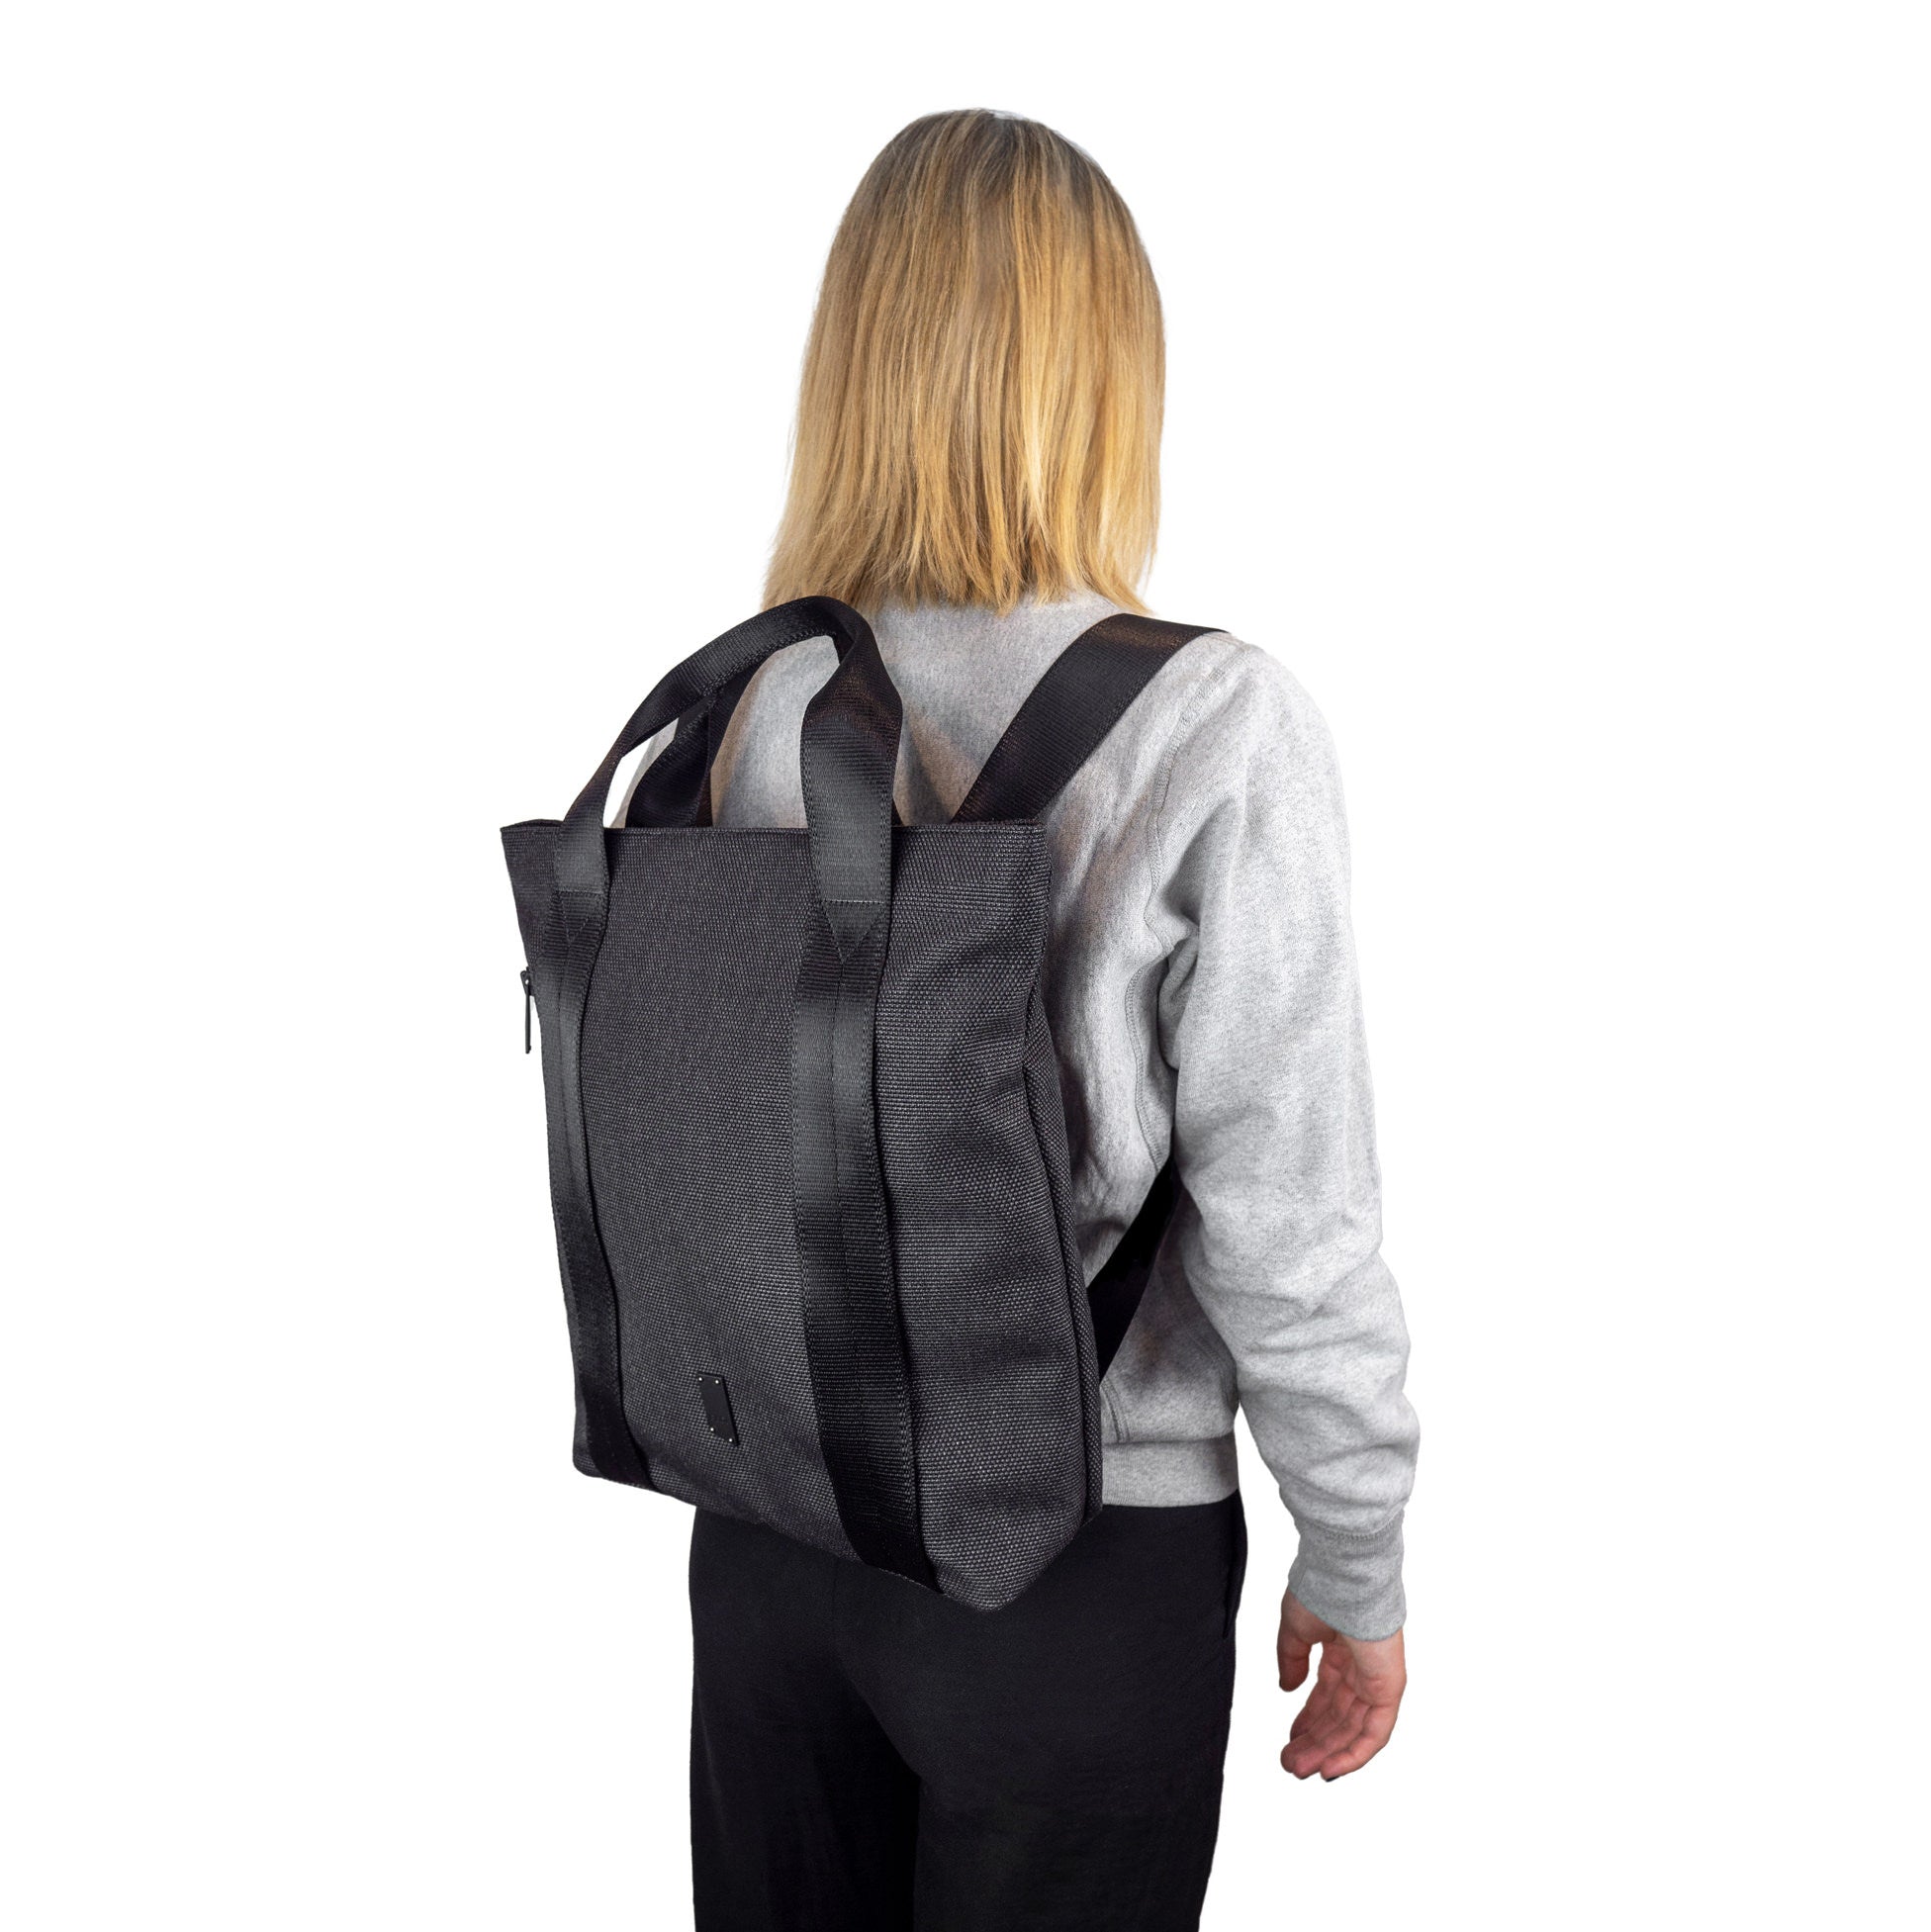 A female model wears the grey KITS as a backpack